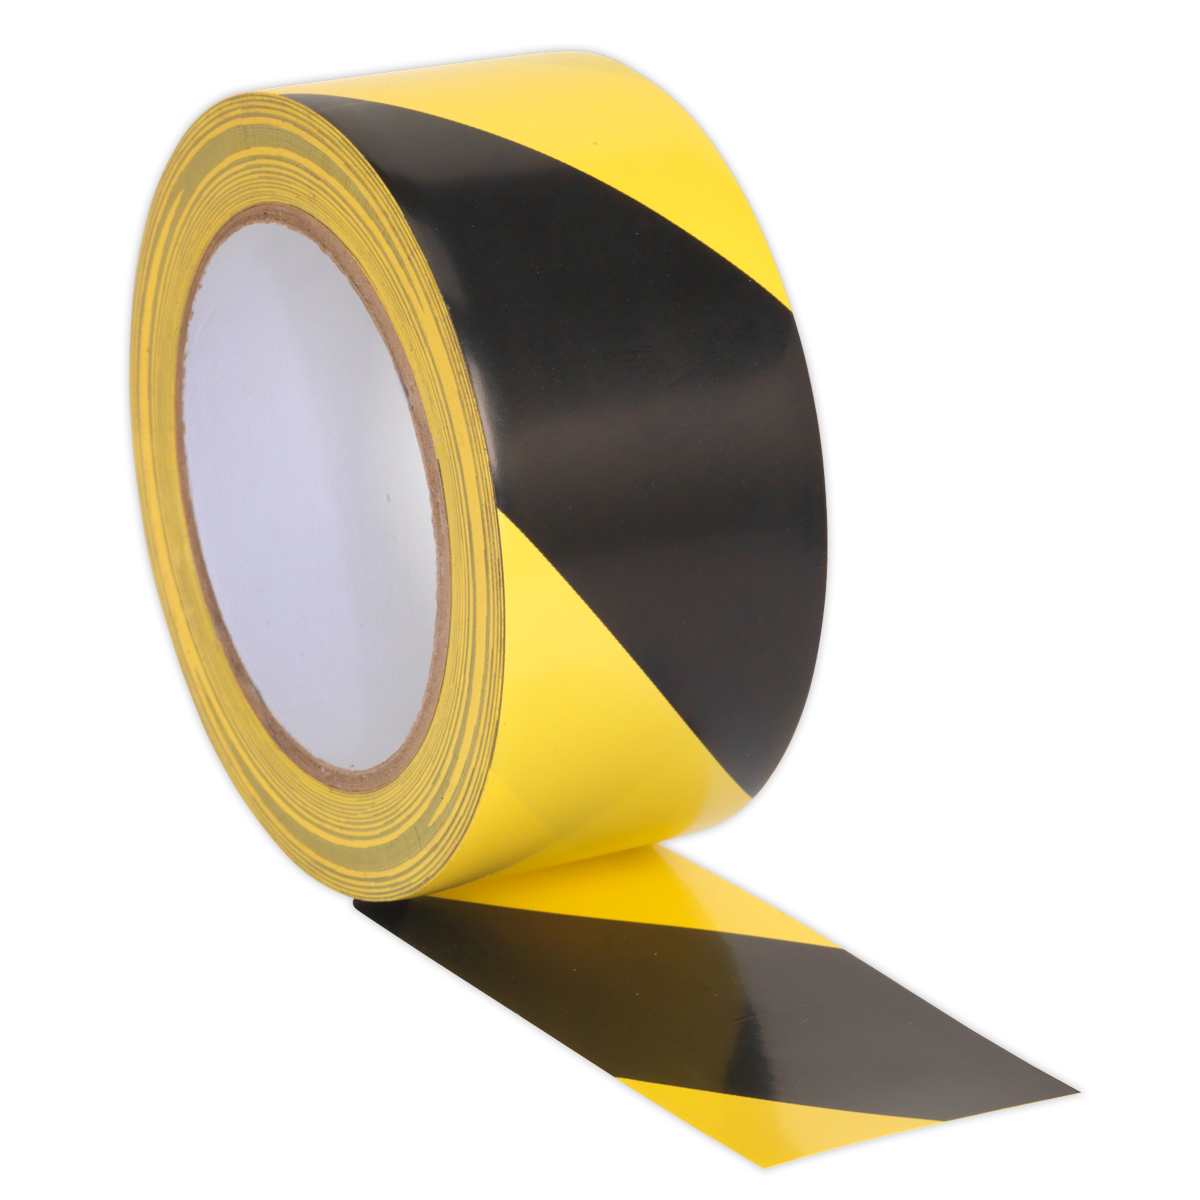 Sealey Hazard Warning Tape 50mm x 33m Black/Yellow